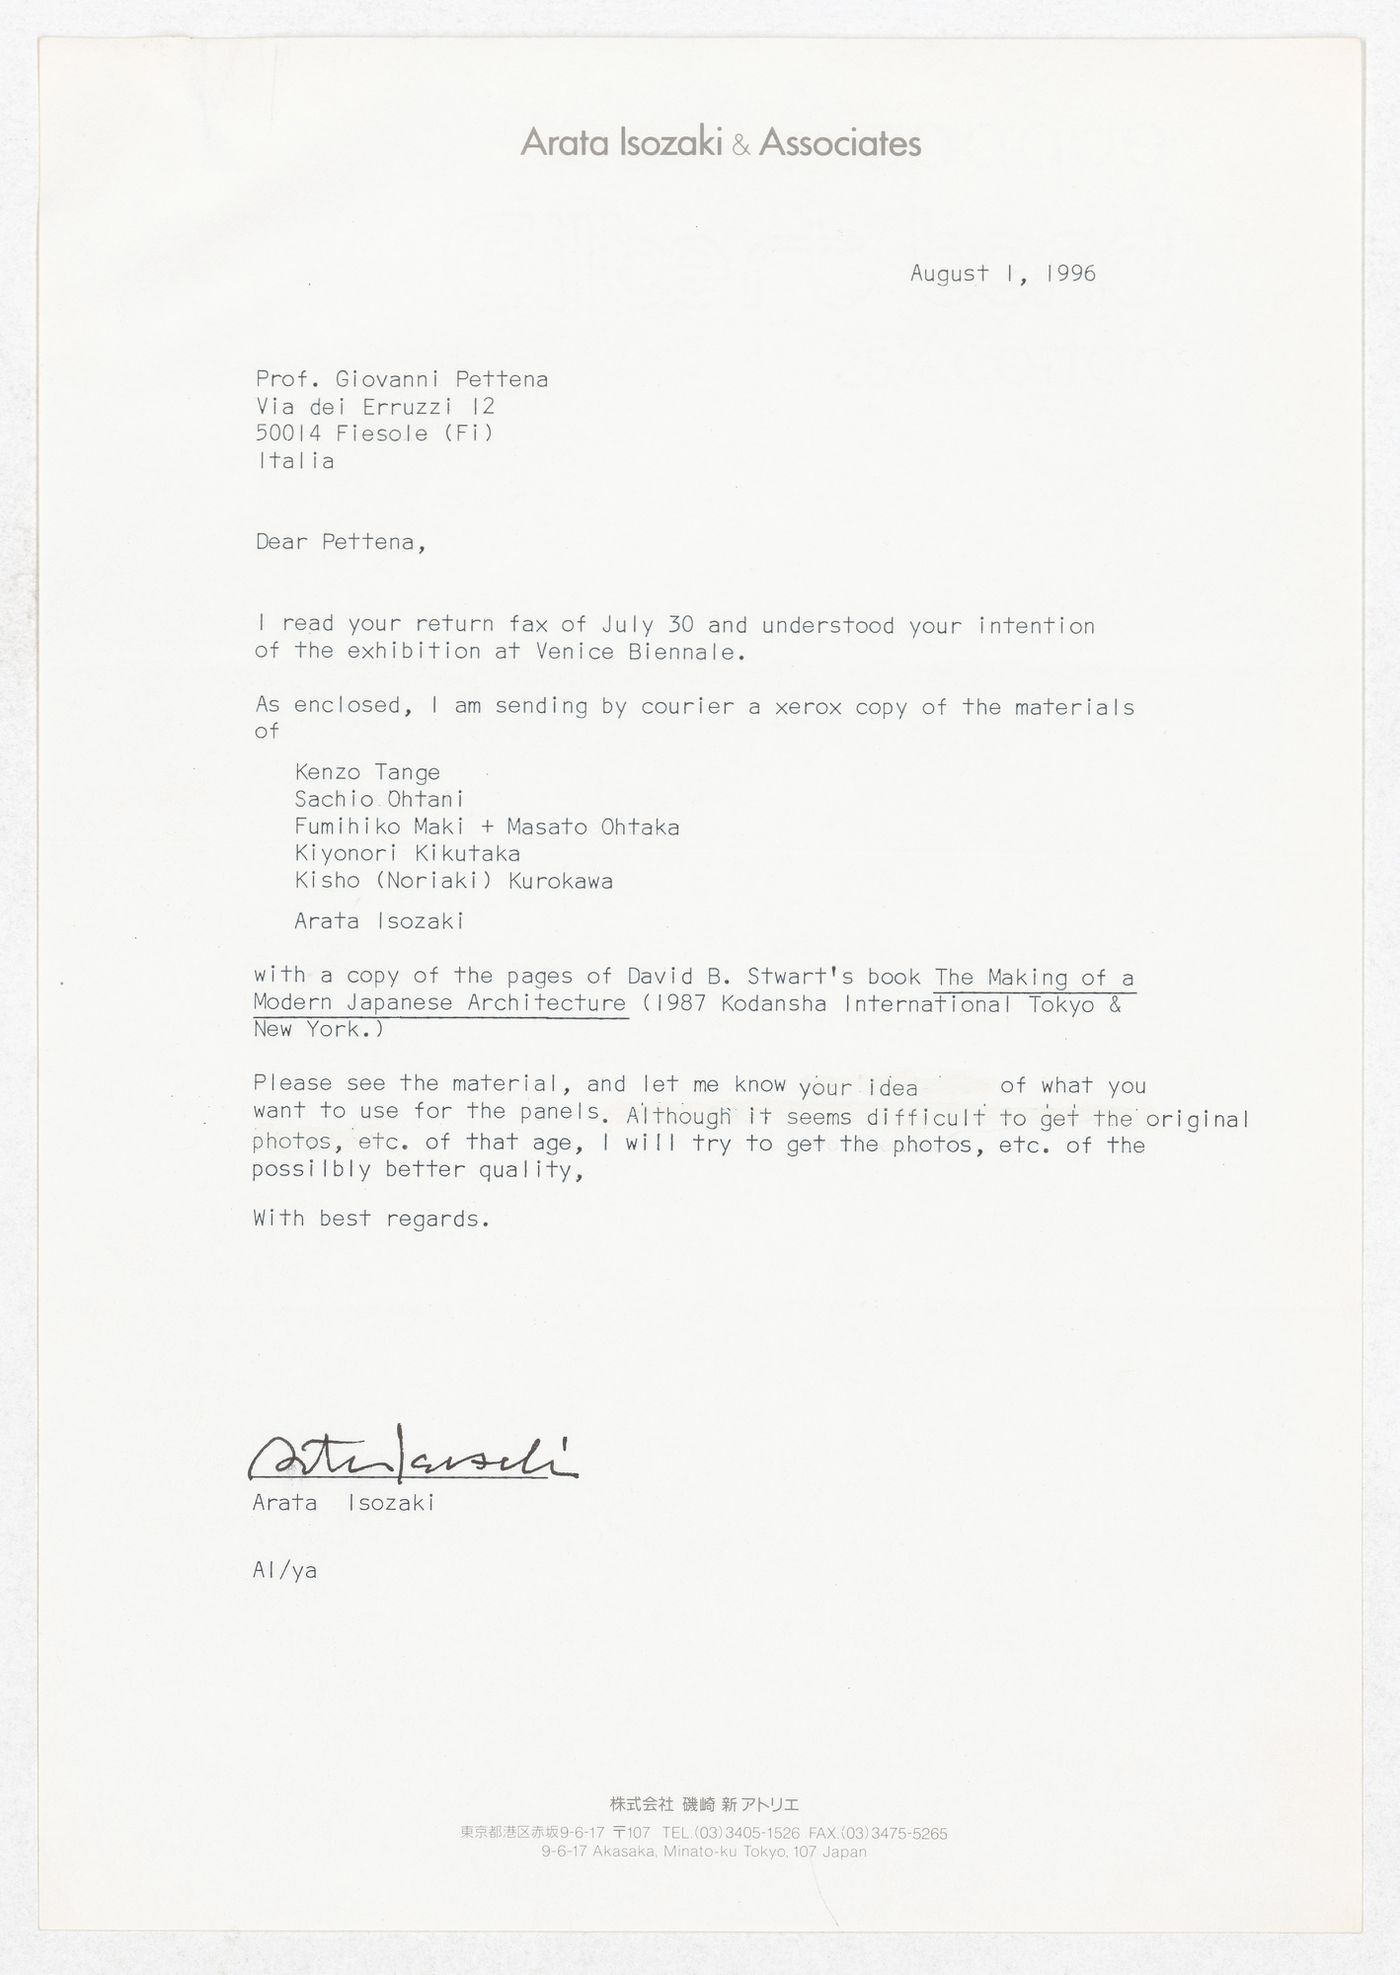 Correspondence from Arata Isozaki regarding the exhibition Radicals. Architecttura e Design 1960-1975